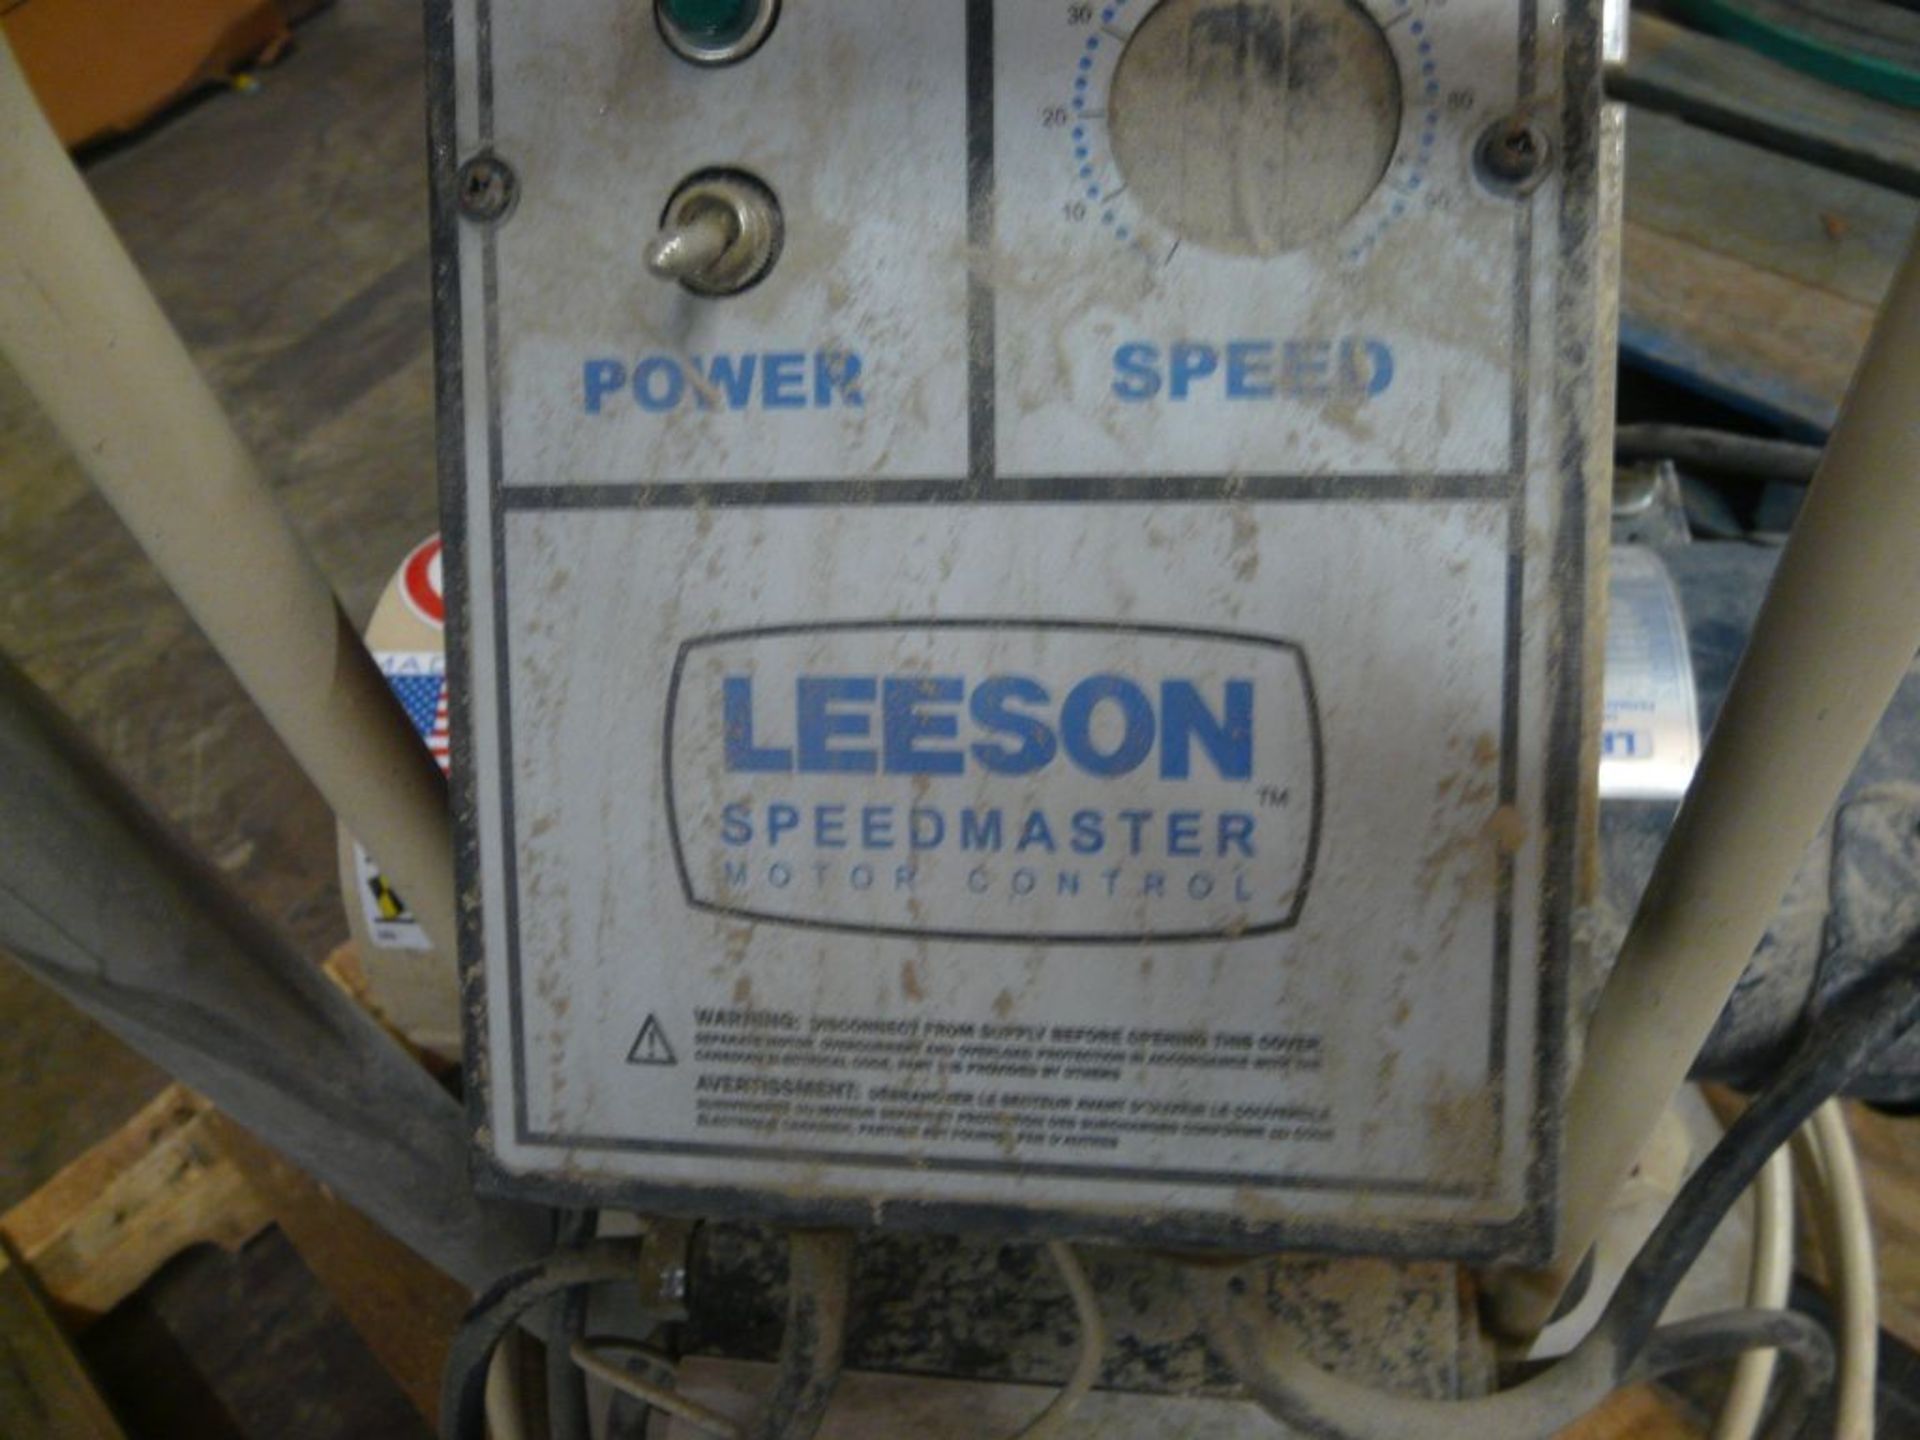 EDCO Concrete Power Trowel|Includes:; Leeson Speedmaster Motor Control Model No. 17430700I17, 8A, - Image 4 of 6